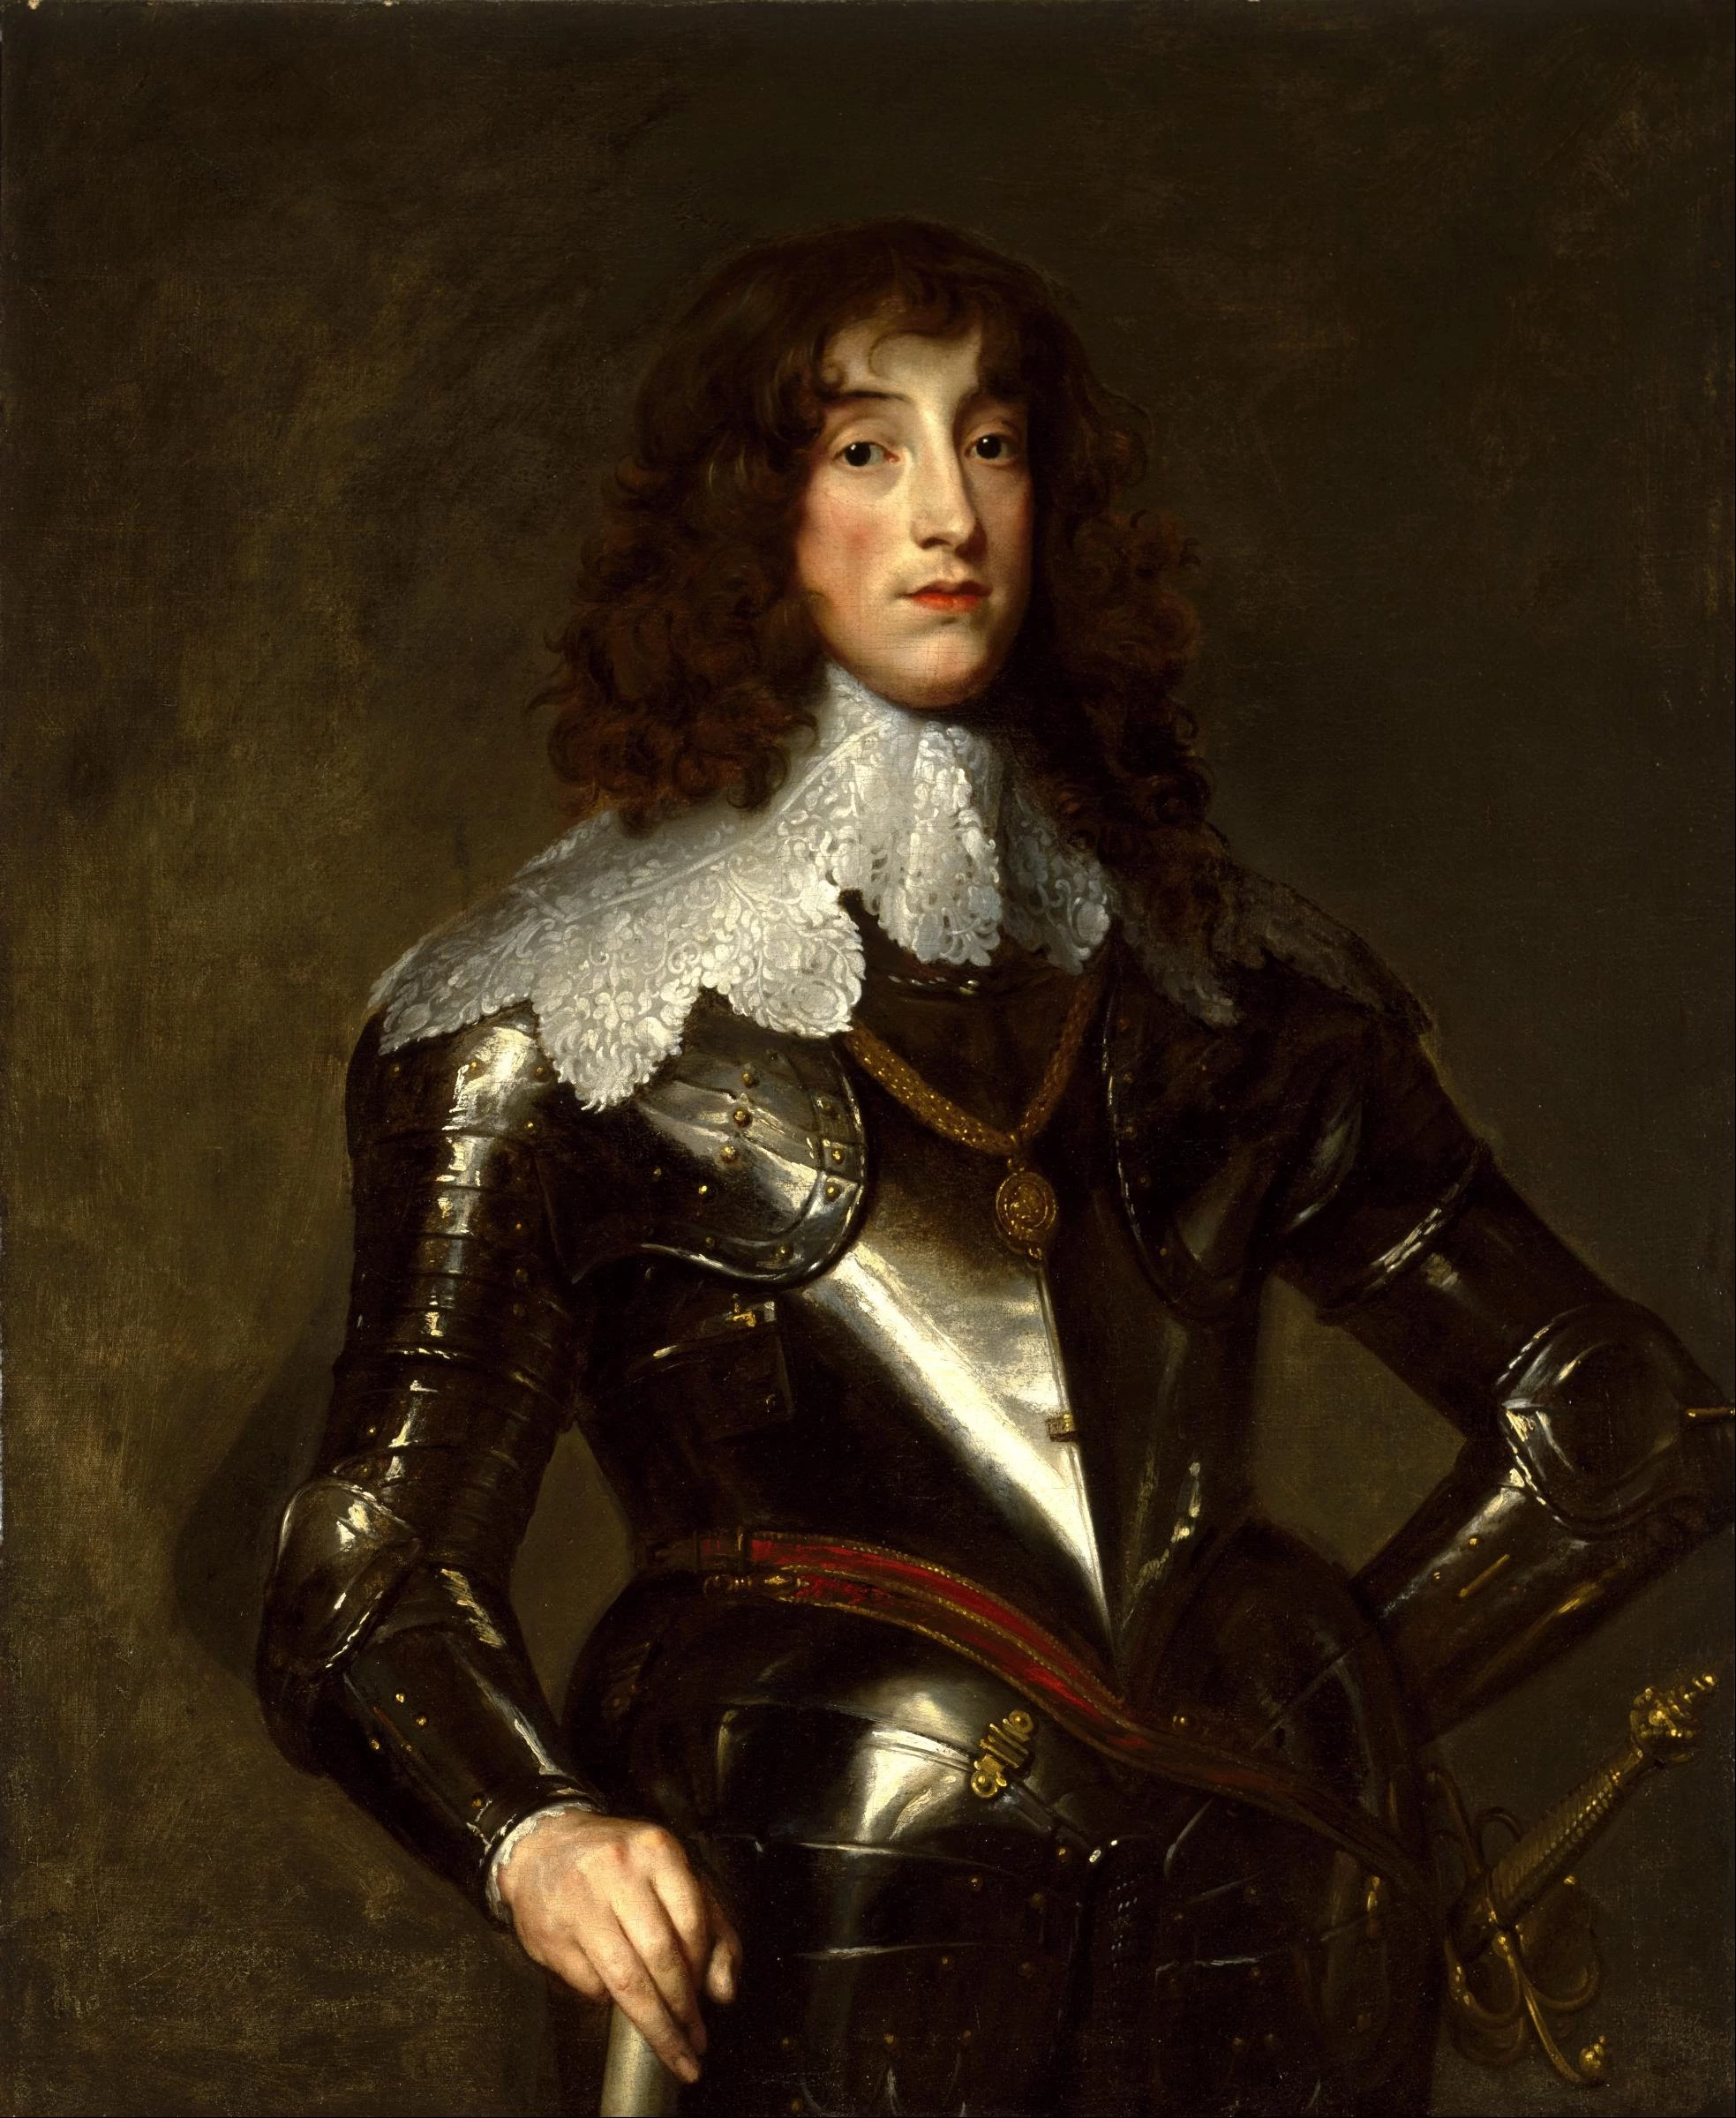 Charles Louis, Elector Palatine, Anthony van Dyck